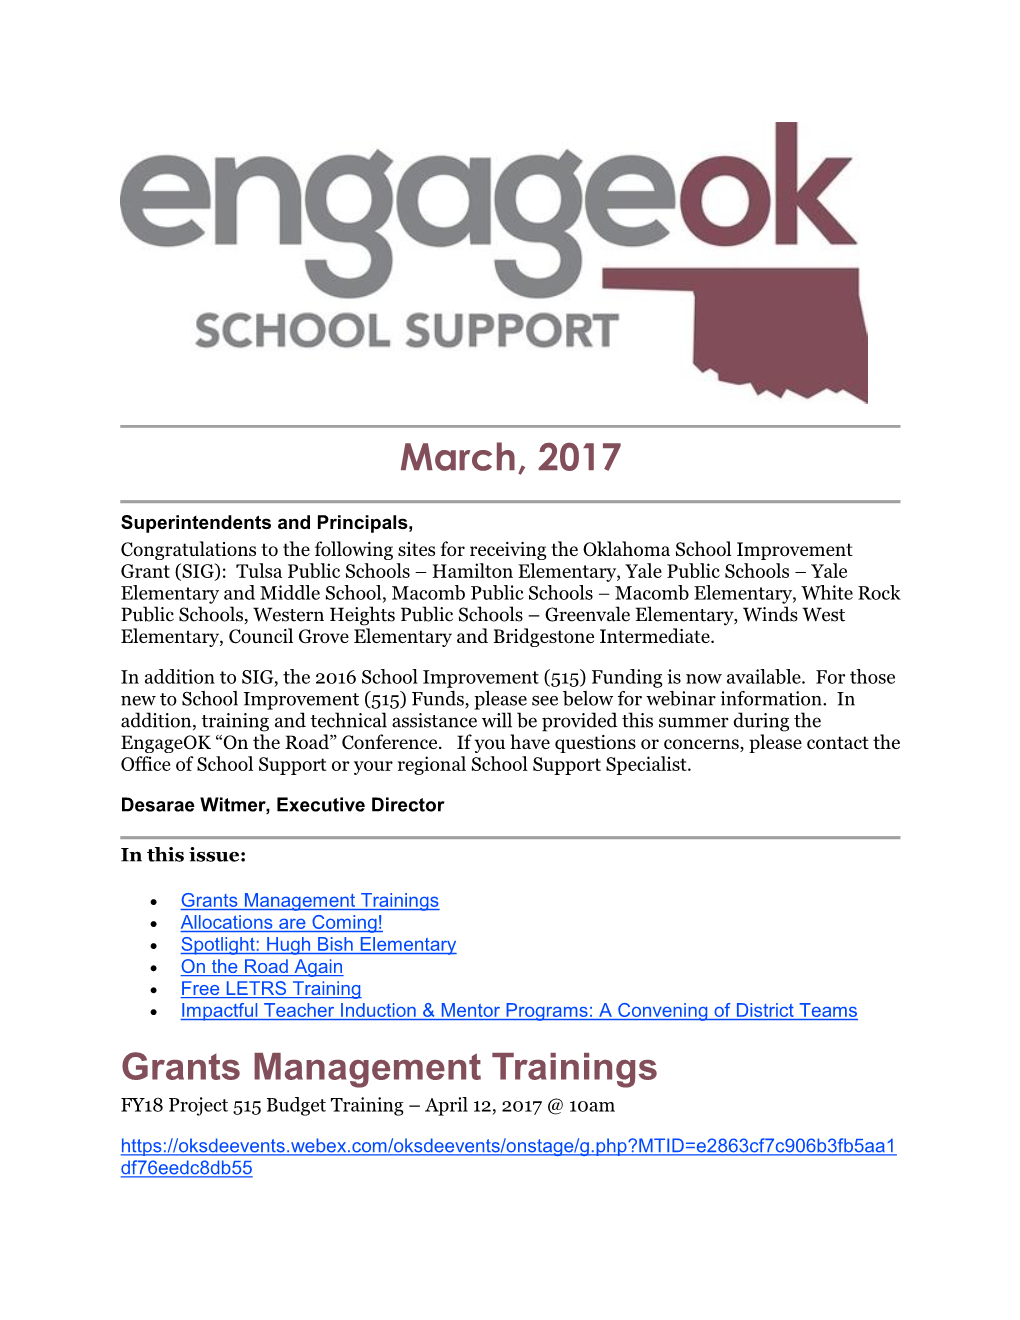 March, 2017 Grants Management Trainings